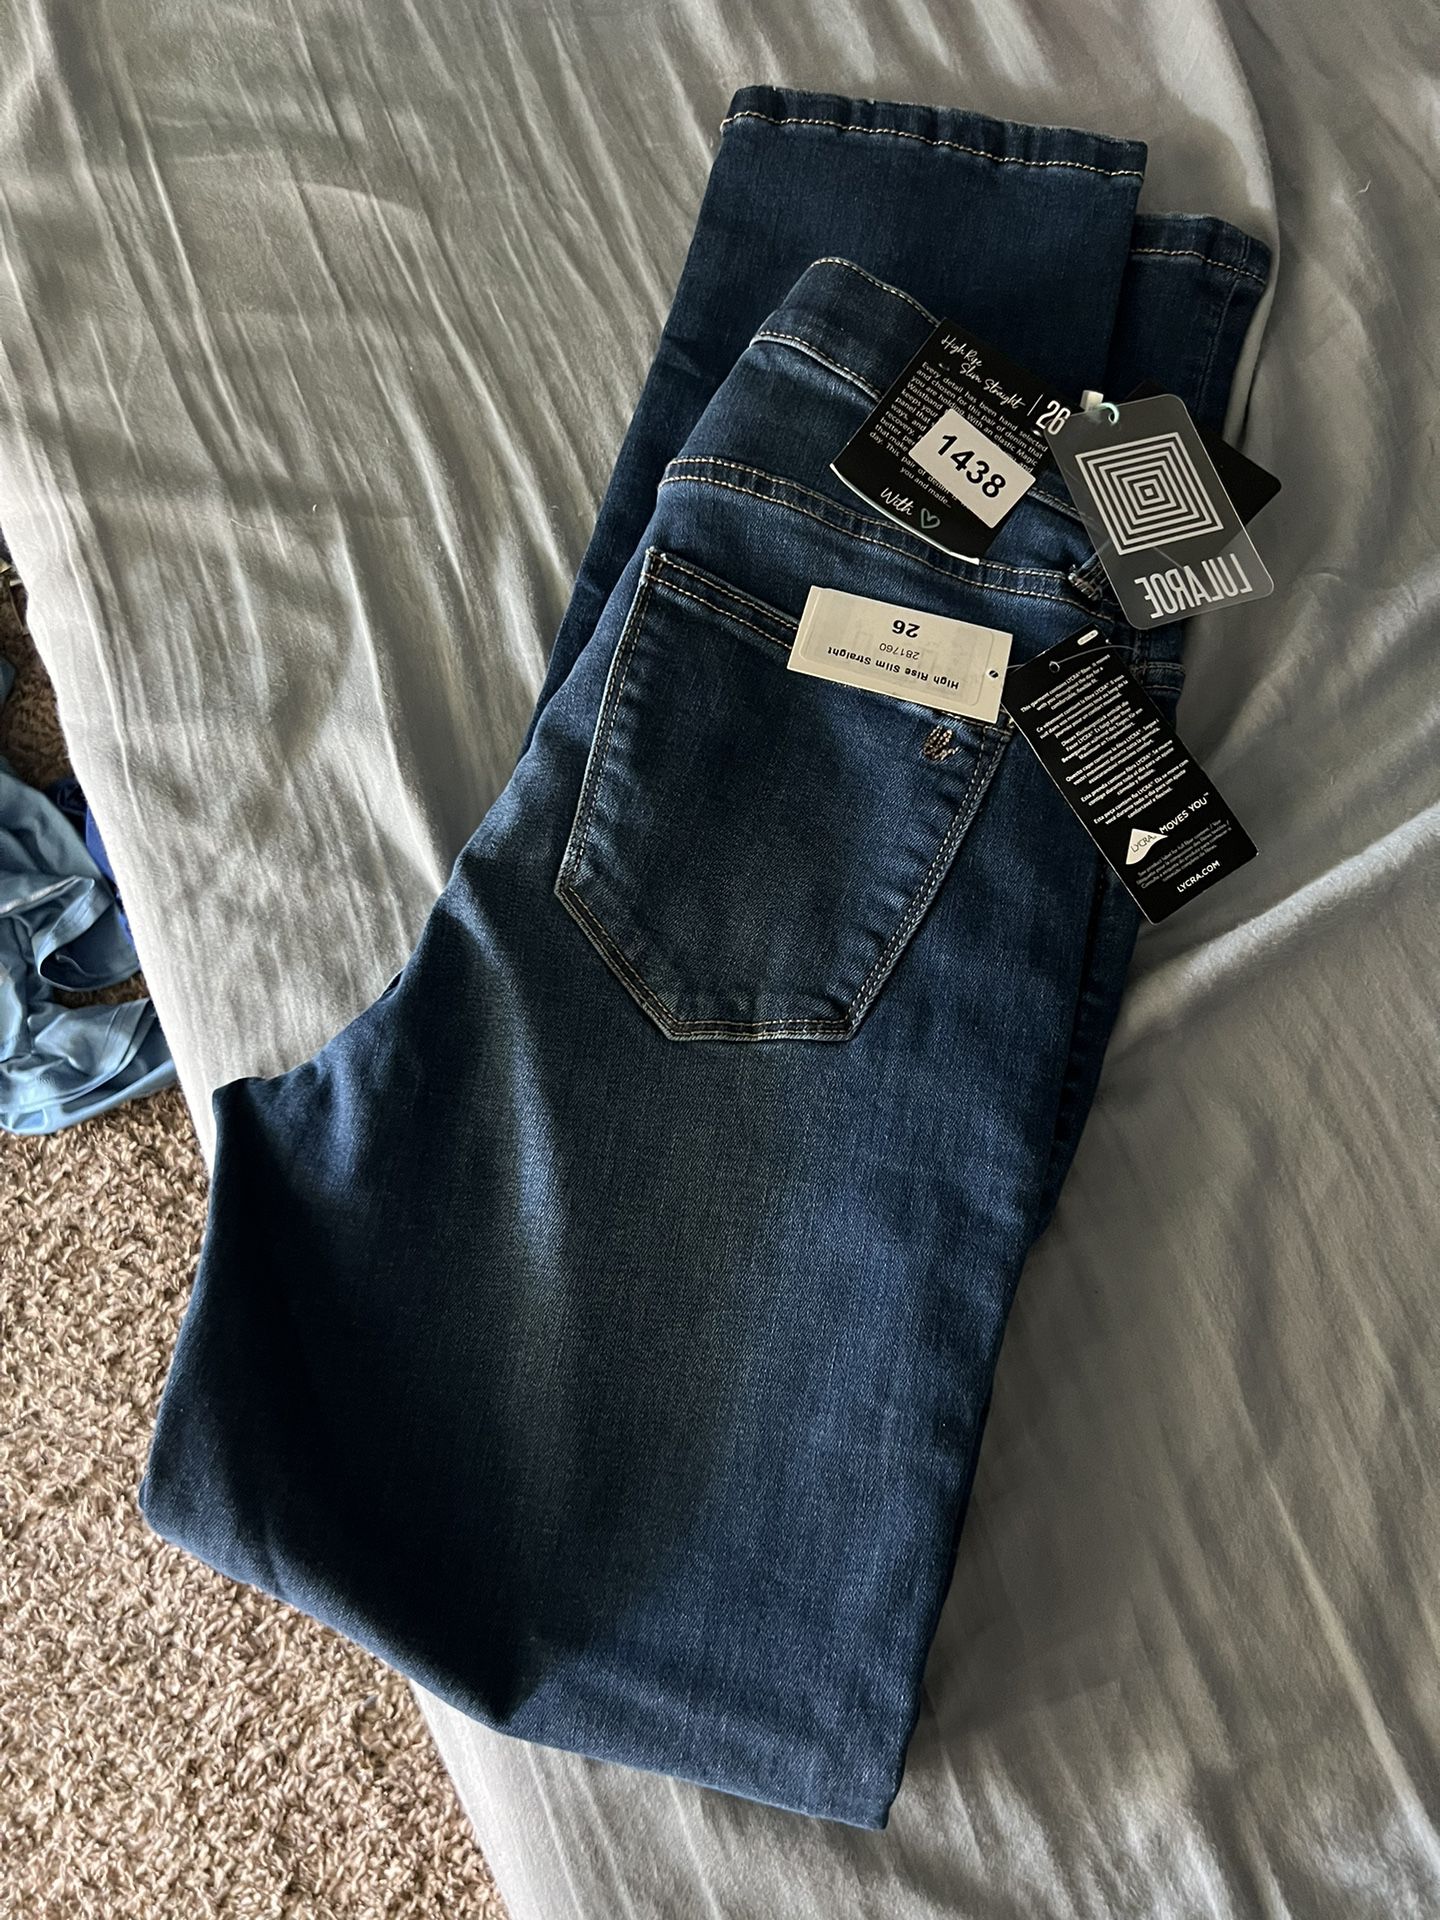 Lularoe Jeans Size 26 NWT